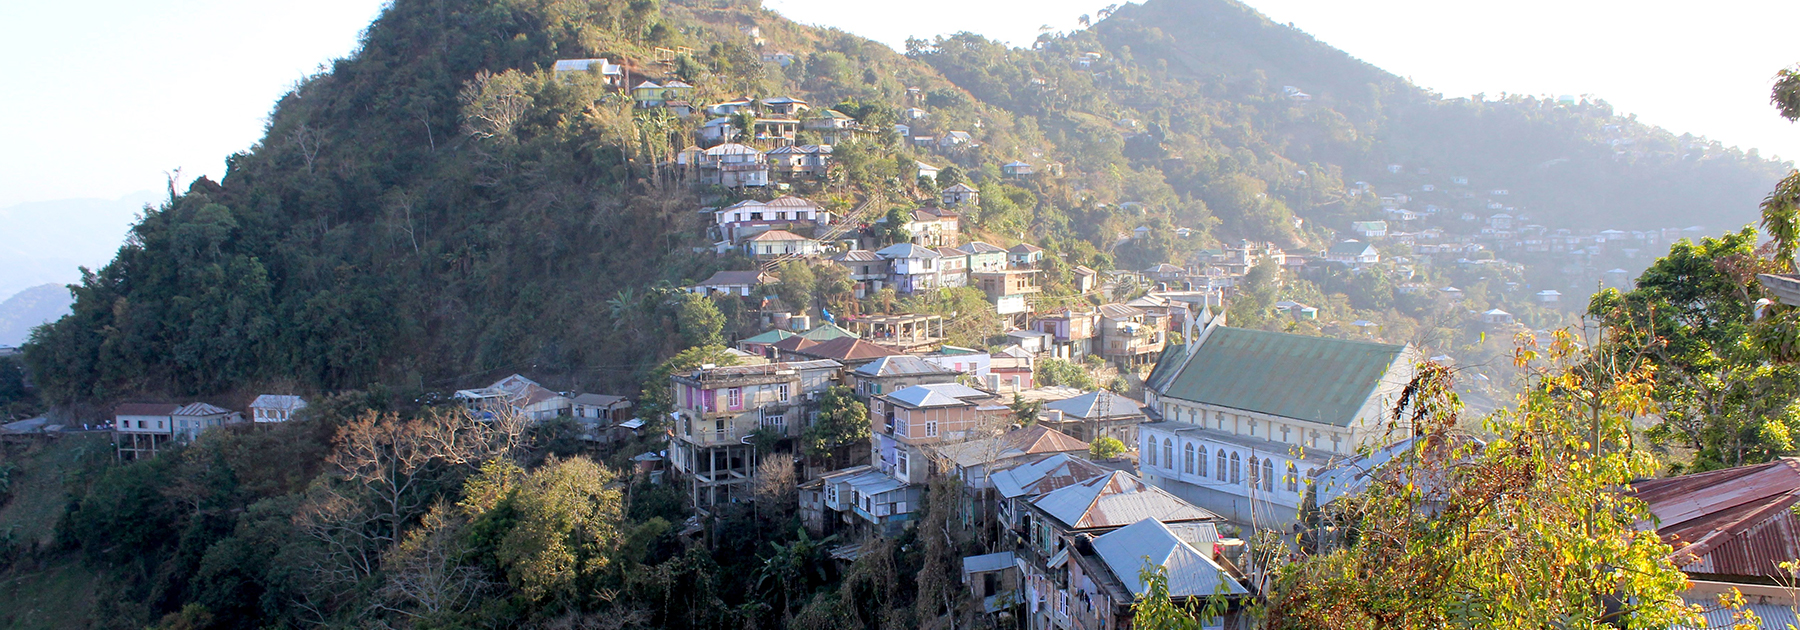 Melthum veng, Mizoram.  (R london, licensed under CC BY-SA 3.0)